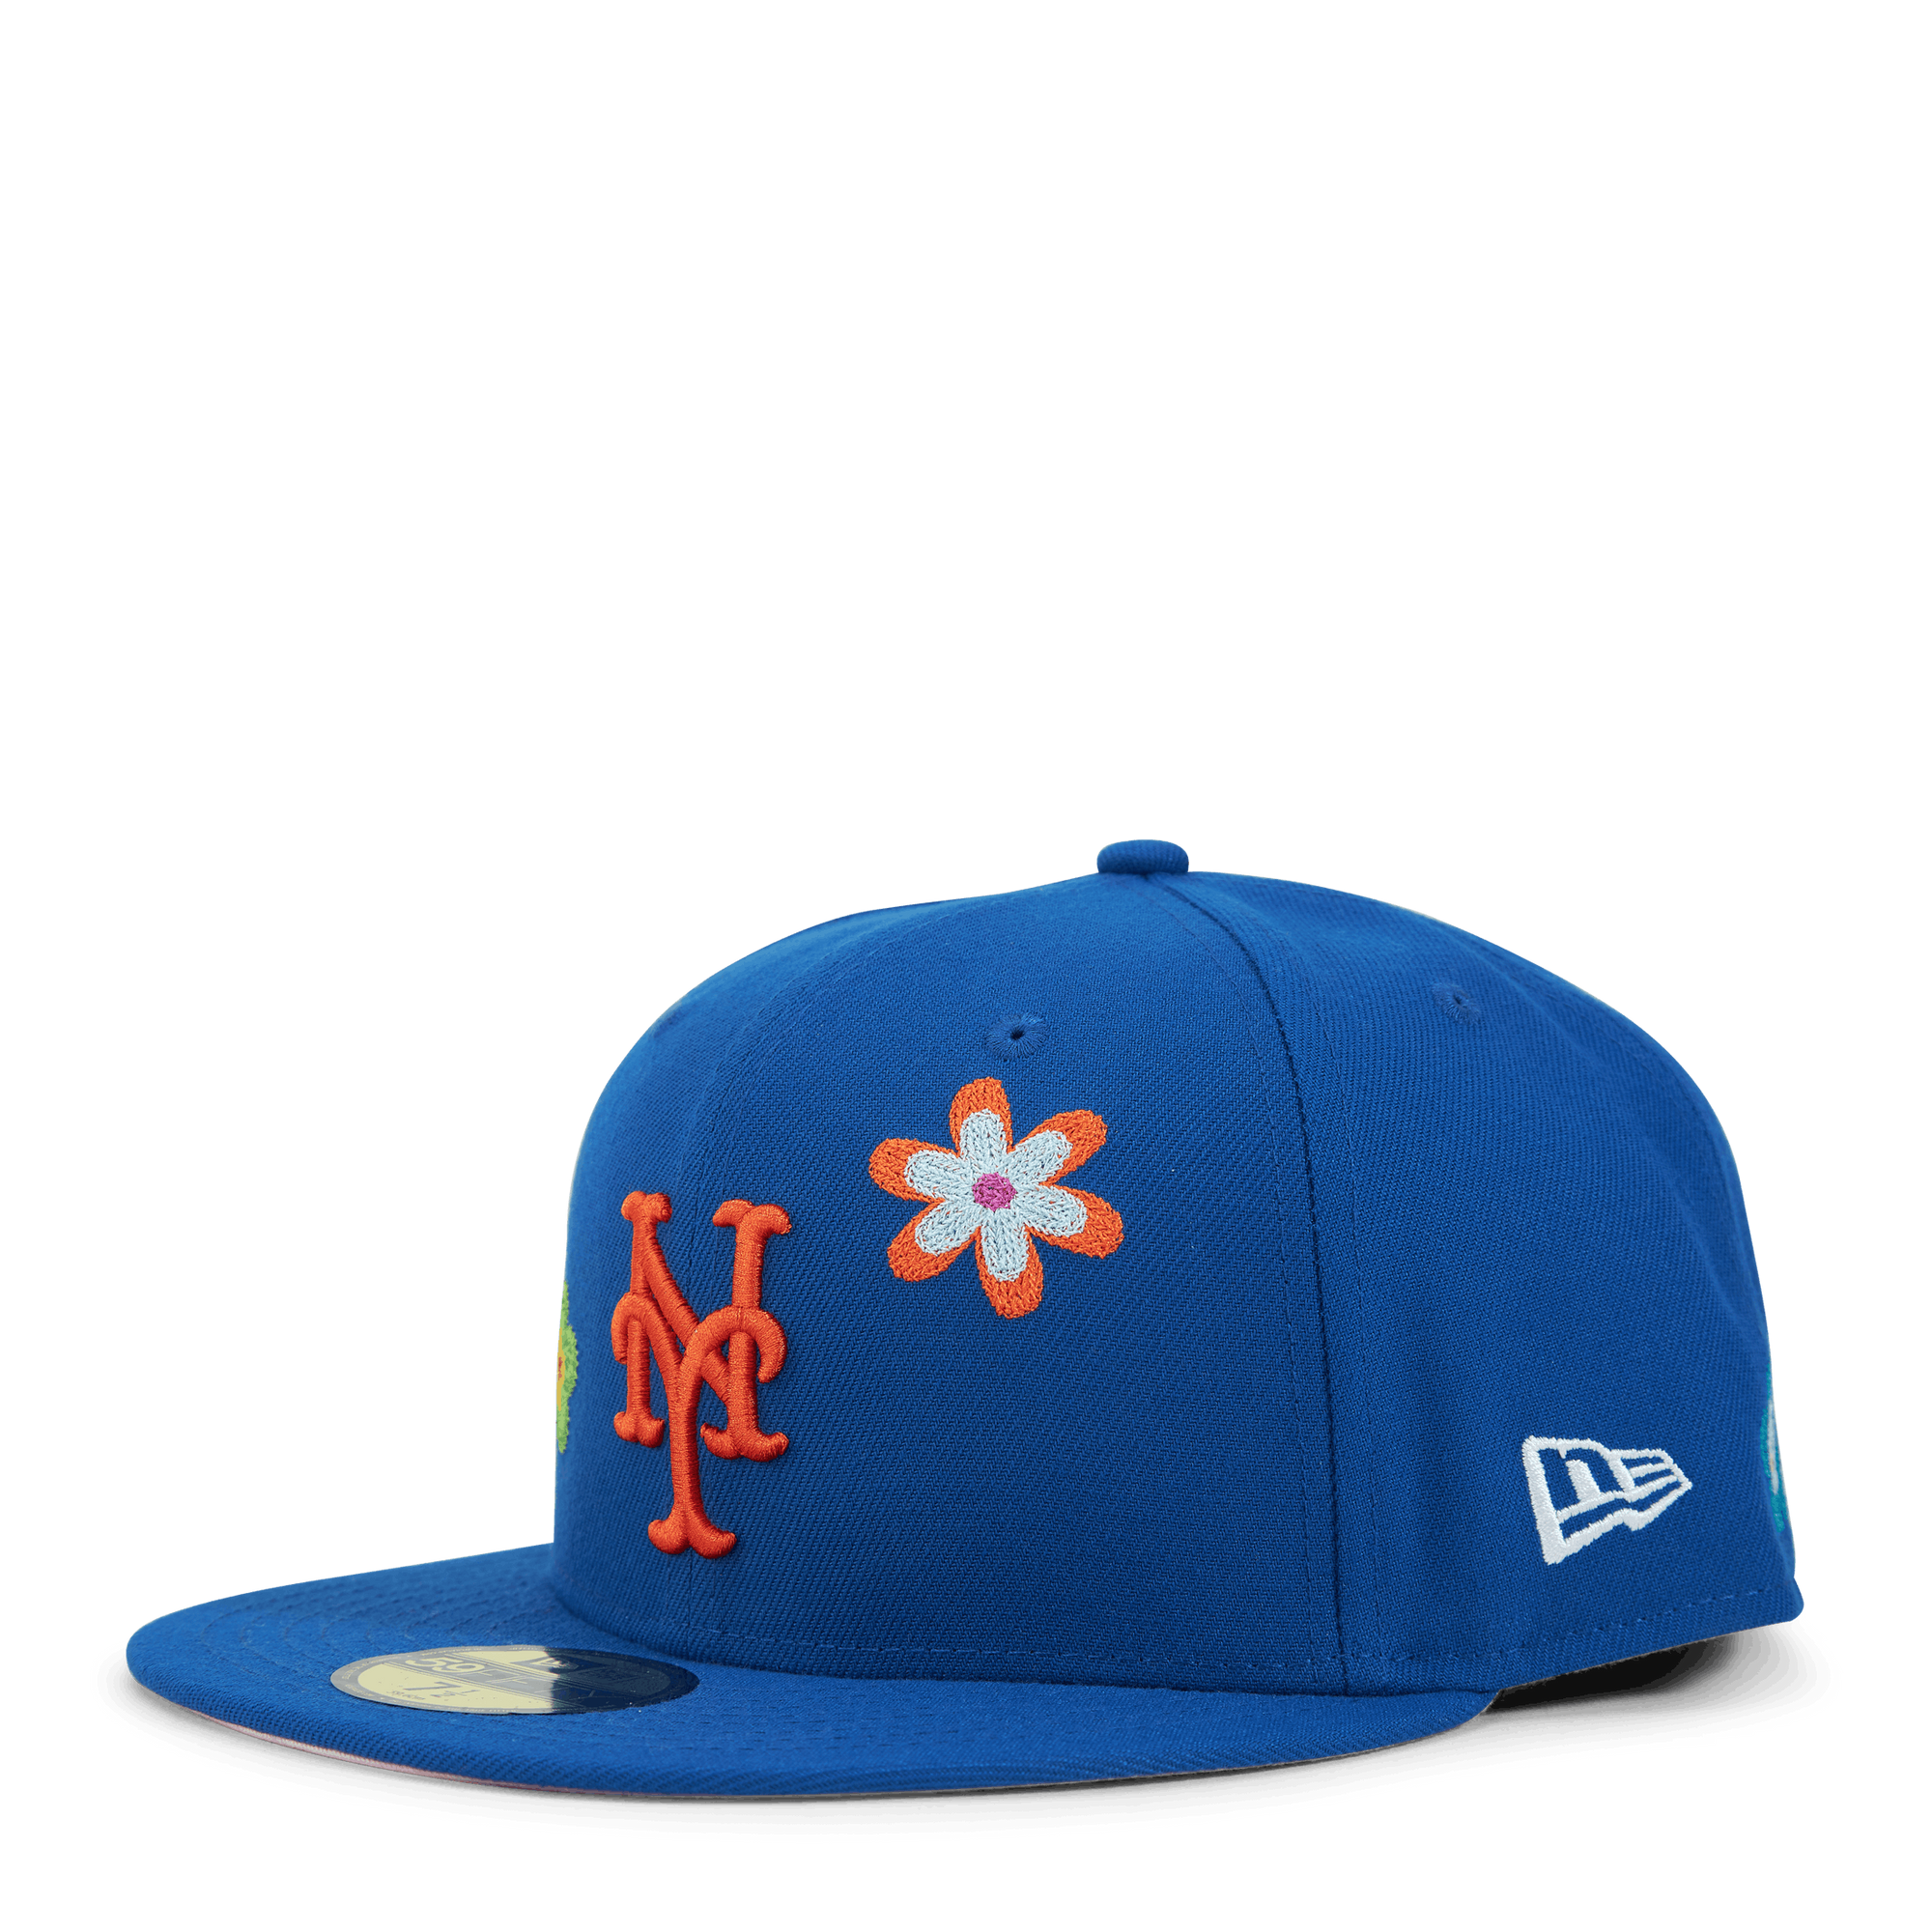 MLB FLORAL 5950 NEW YORK METS